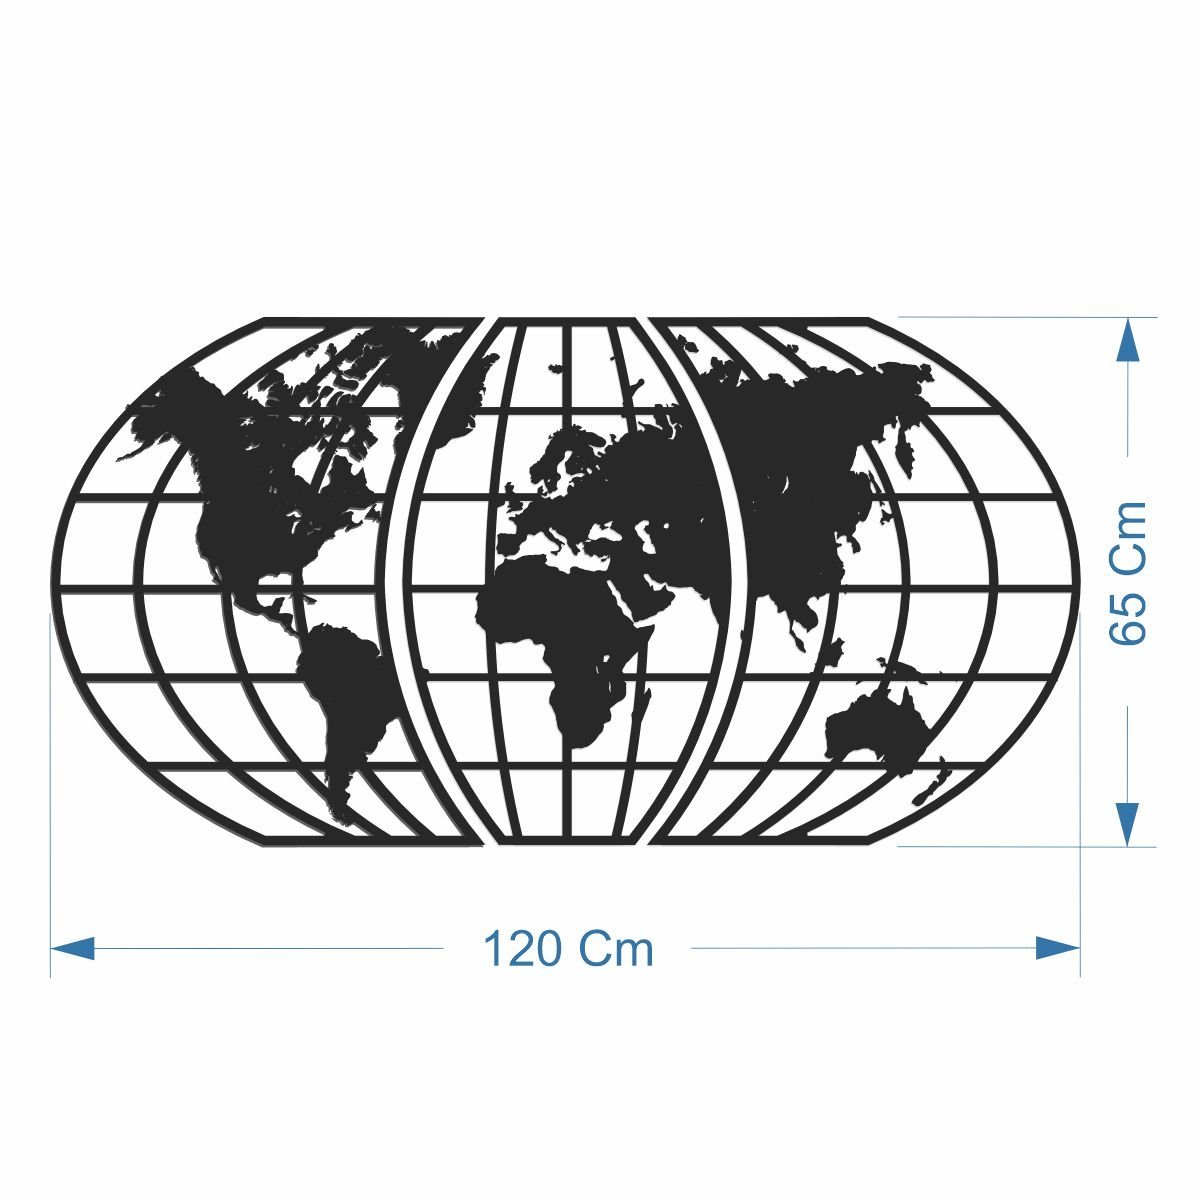 Quadro Decoracao Vazado Mapa Mundi World Tripl Branco 120x65 - 4